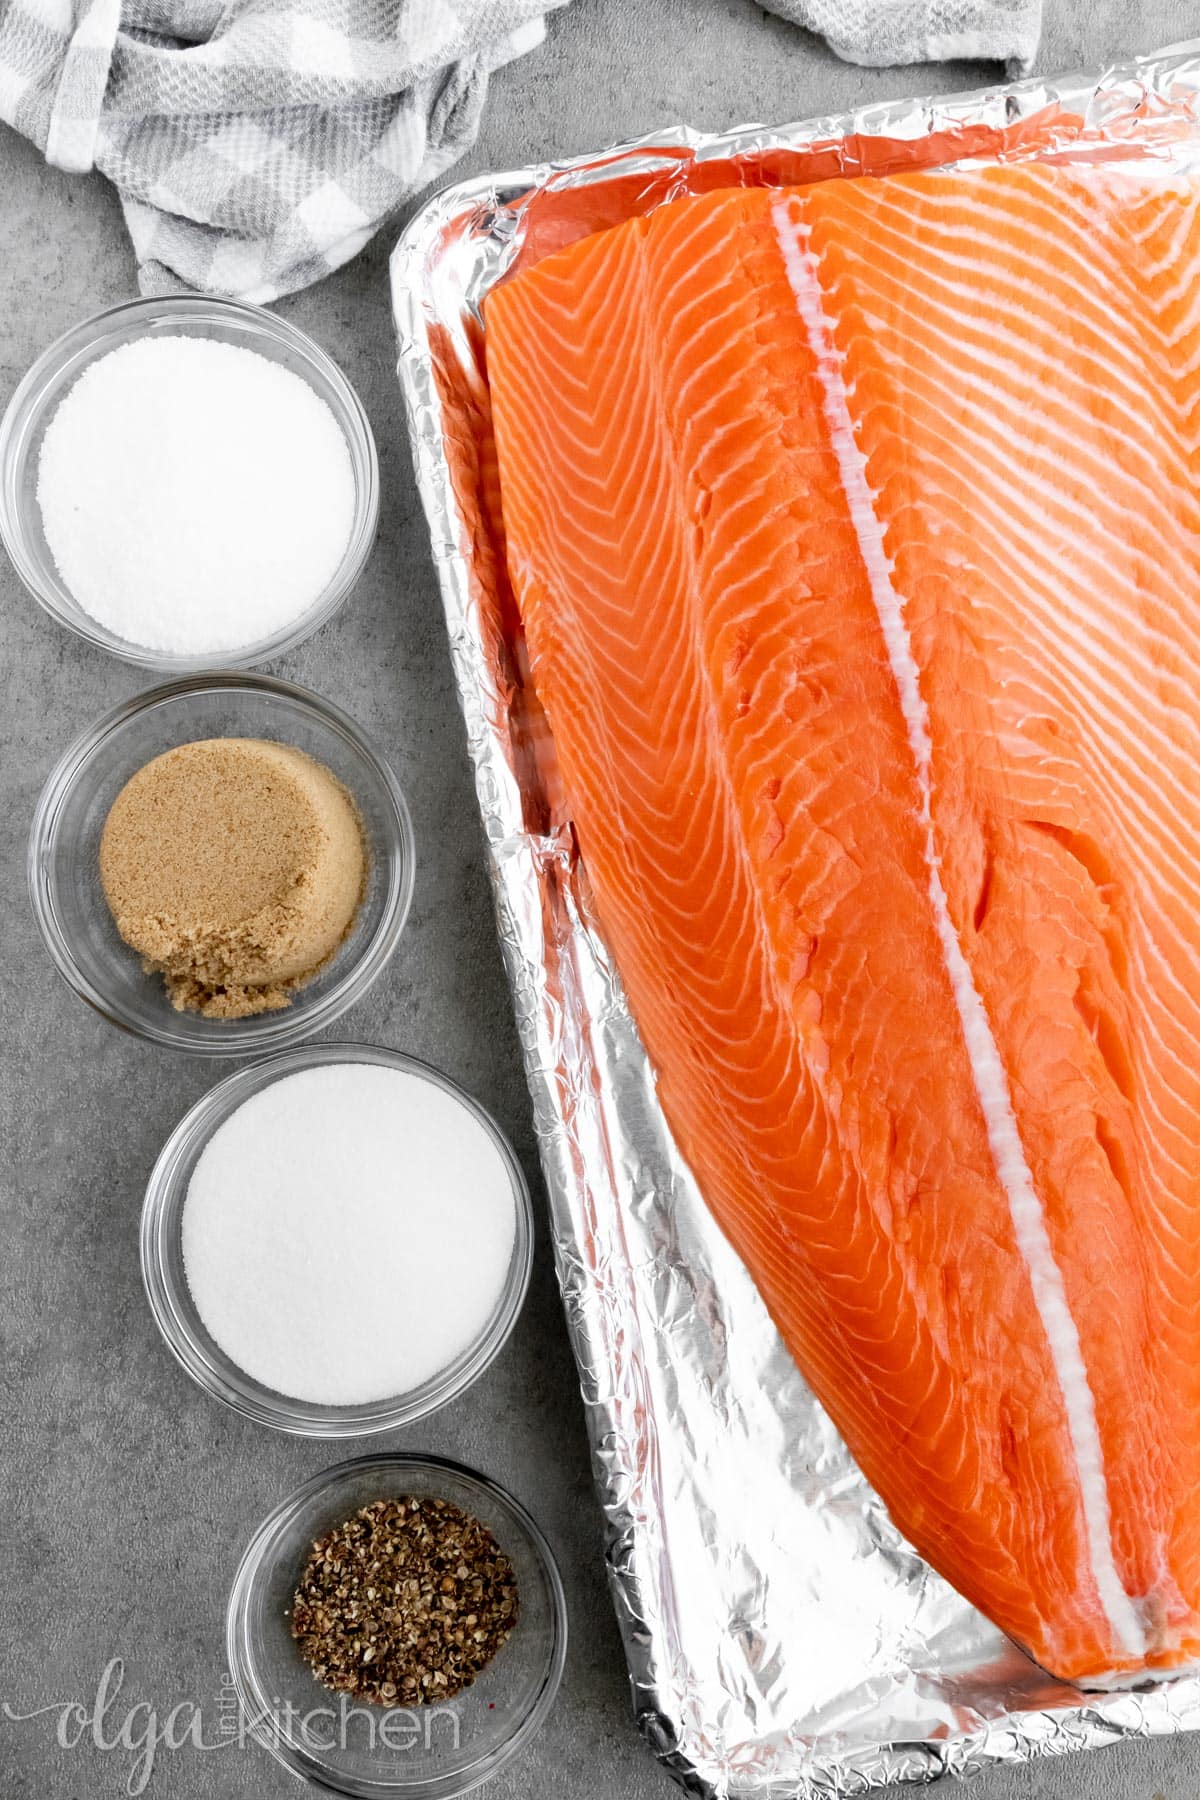 Hot smoked salmon cure recipe. #smokedsalmon #salmon #olgainthekitchen #holiday #summer #homemade